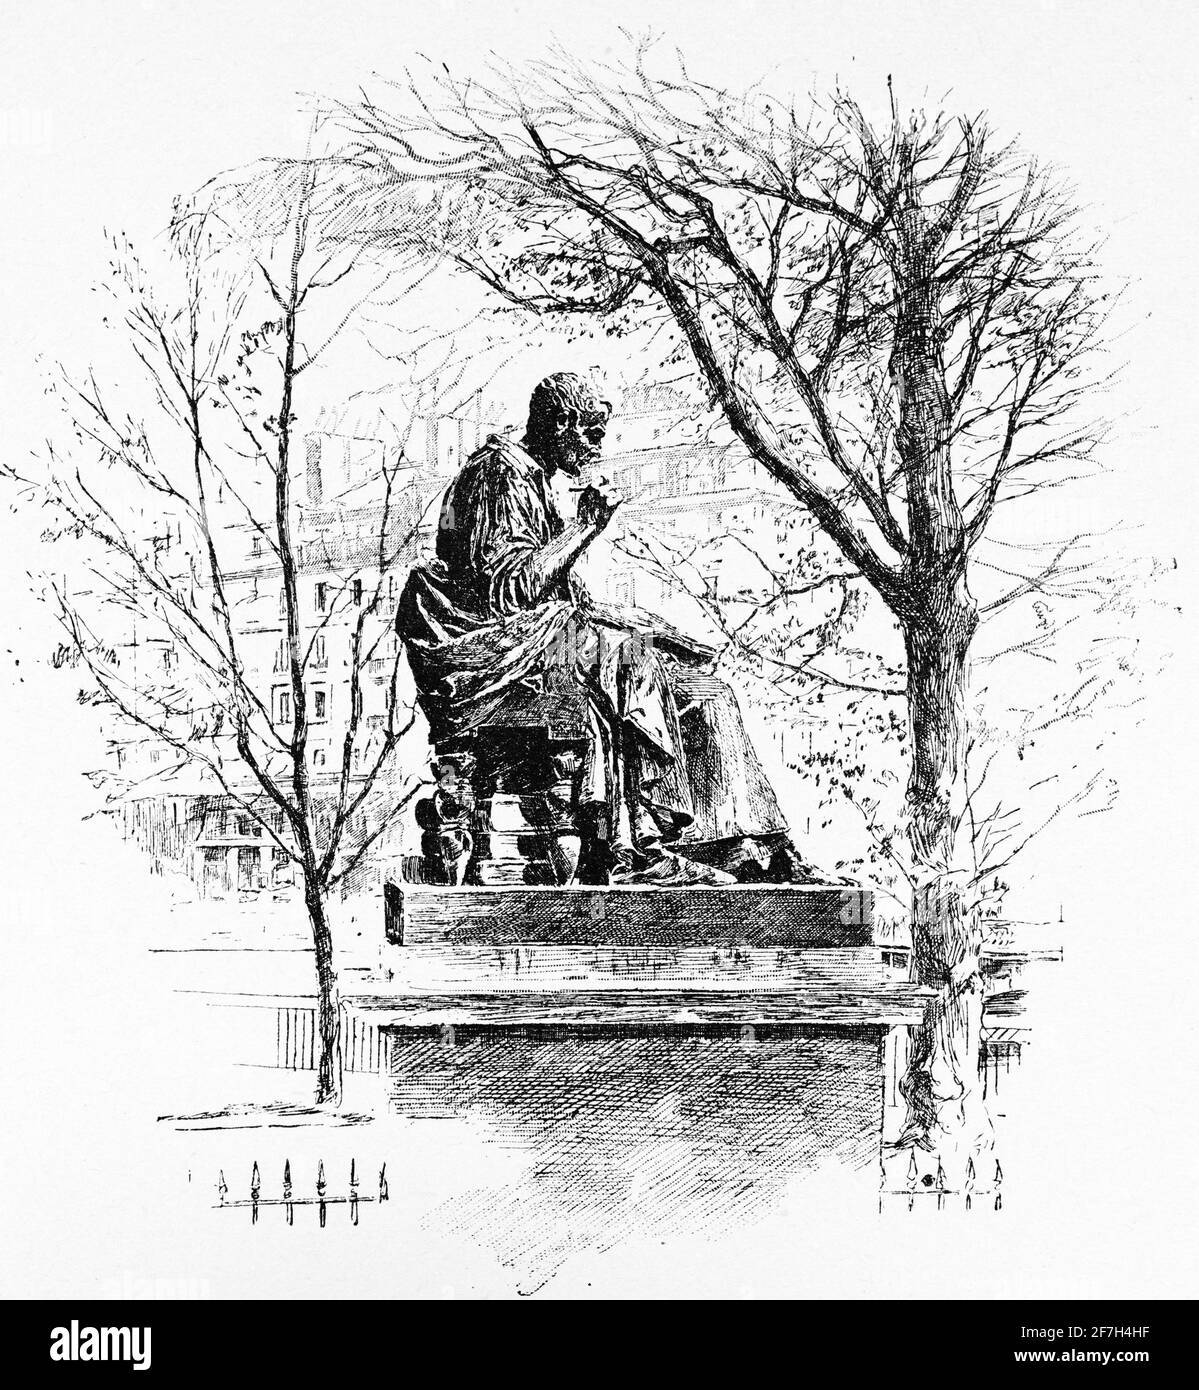 Statue von Genf geboren Jean-Jacques Rousseau auf der Rousseau Insel Ile de Rousseau im Genfer See, Genf, Schweiz, Euope Stockfoto